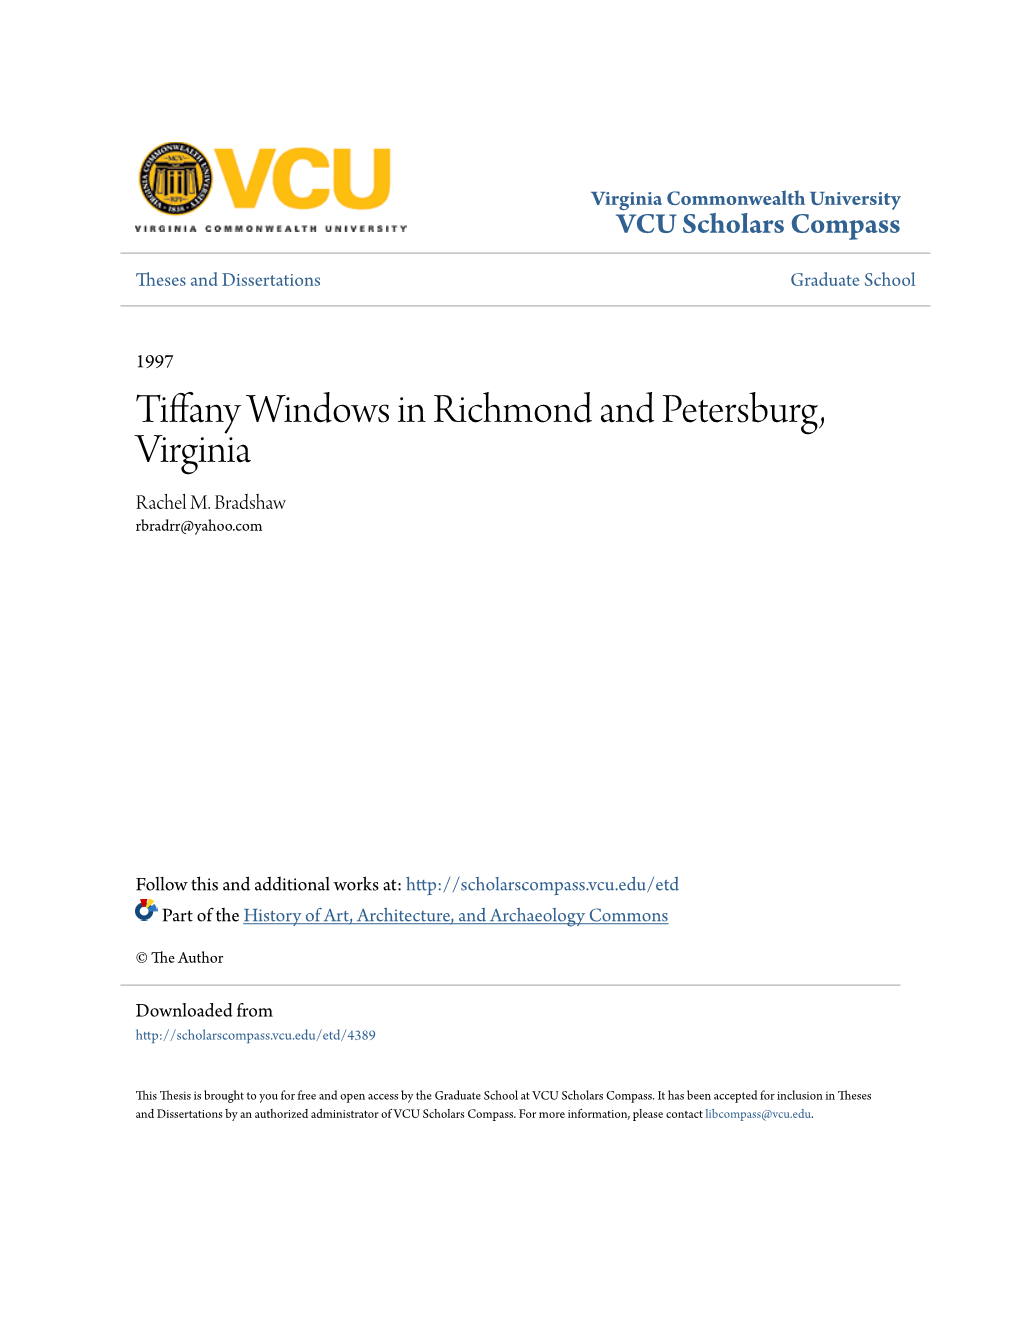 Tiffany Windows in Richmond and Petersburg, Virginia Rachel M